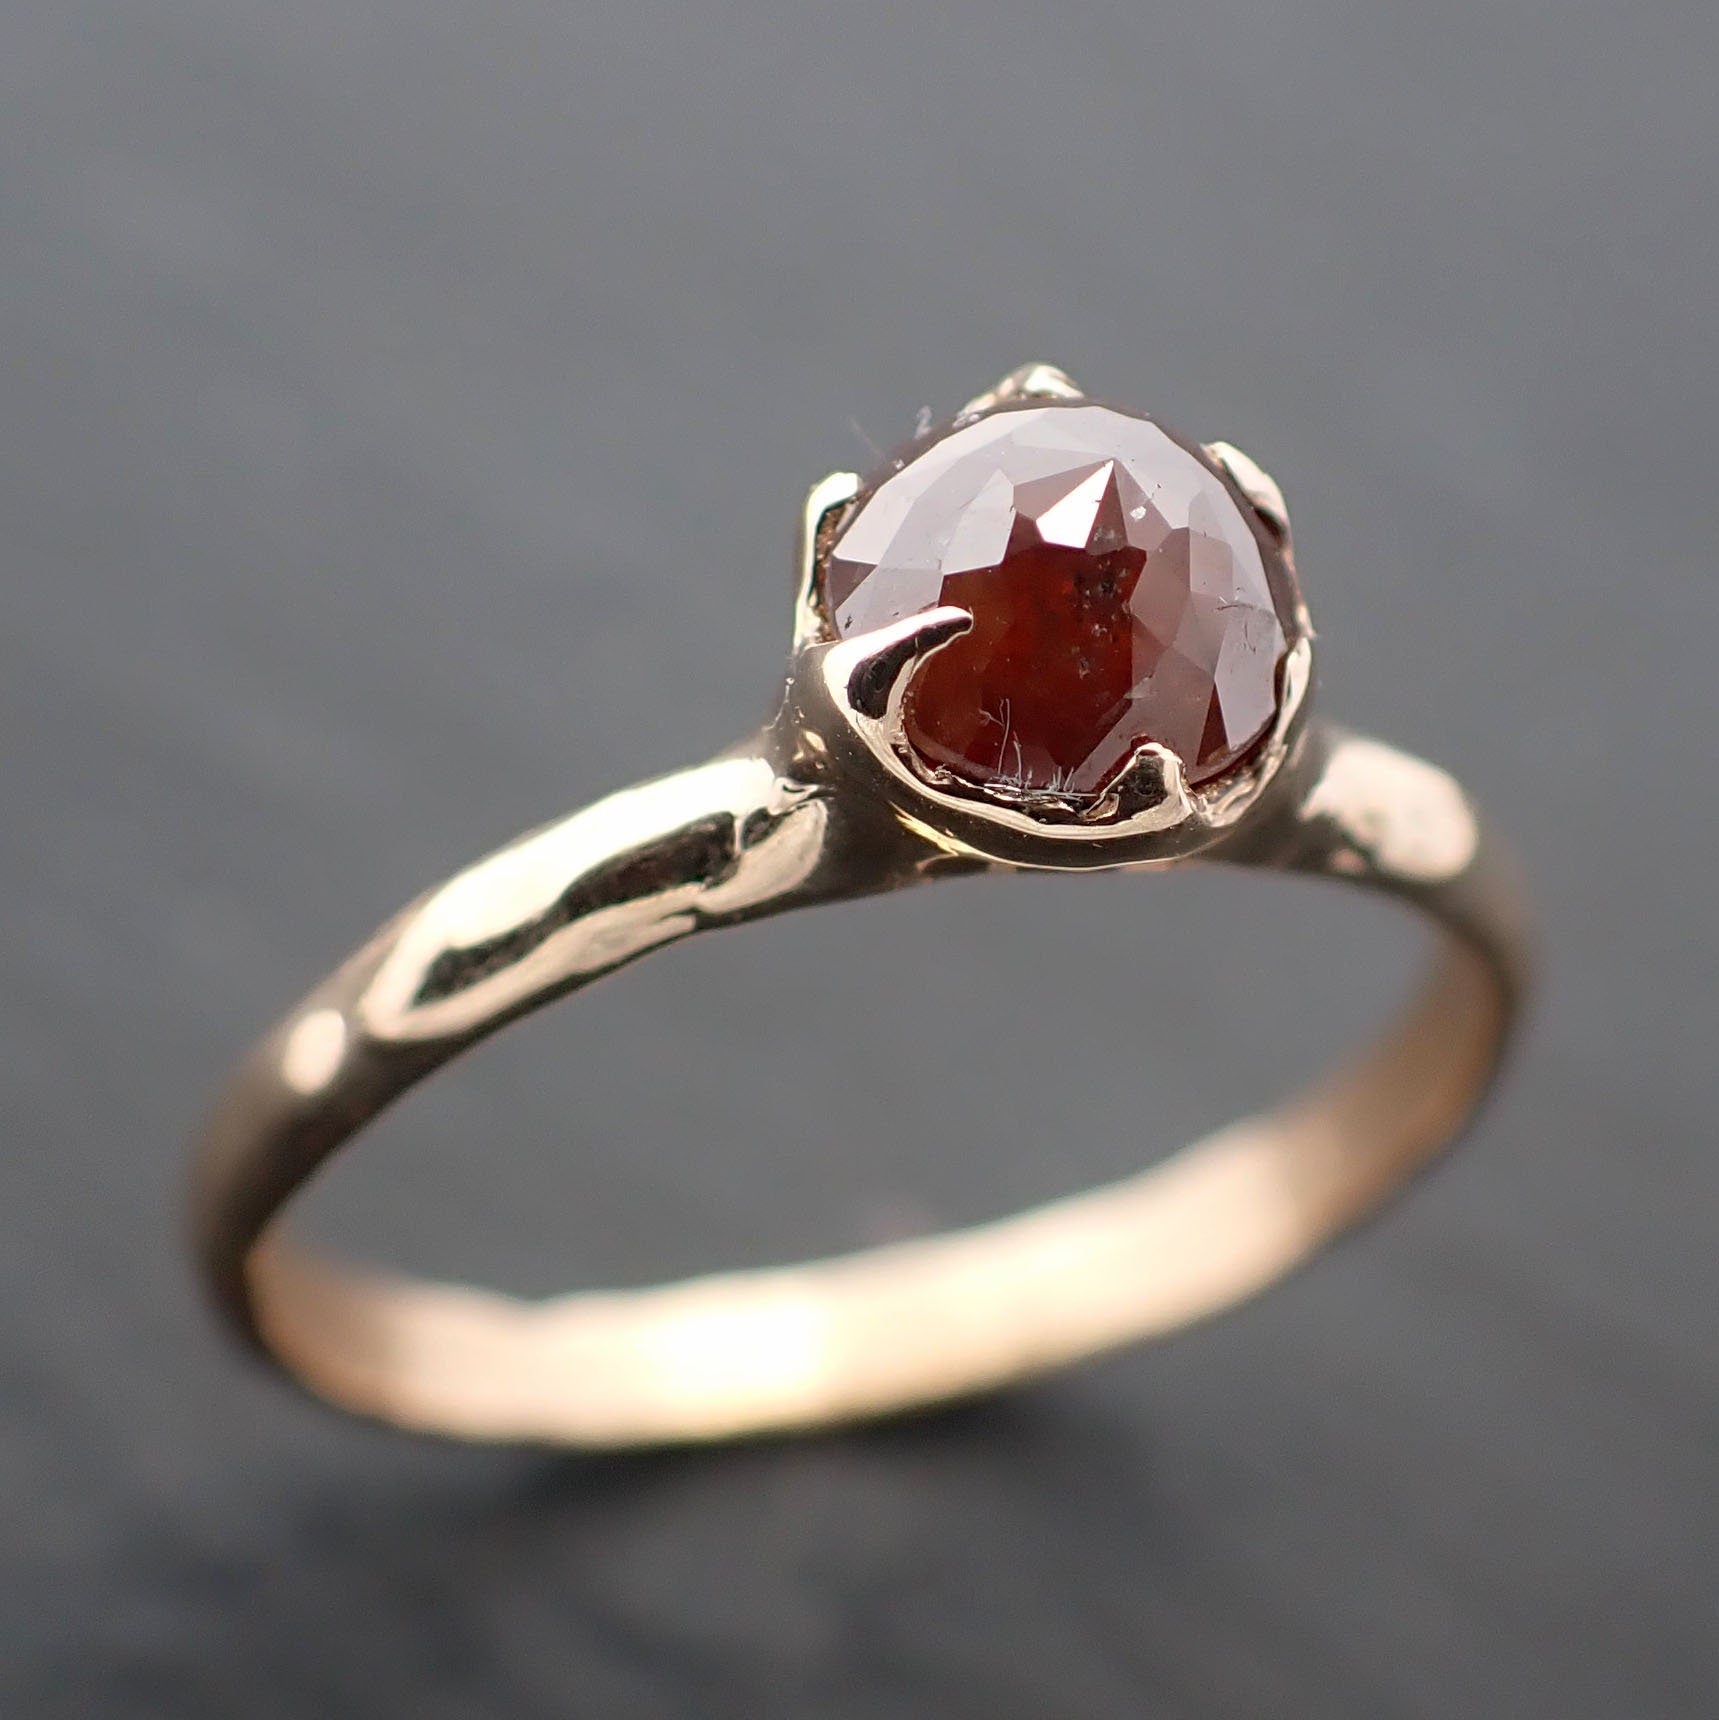 Fancy cut coral orange Diamond Solitaire Engagement 14k yellow Gold Wedding Ring byAngeline 3521